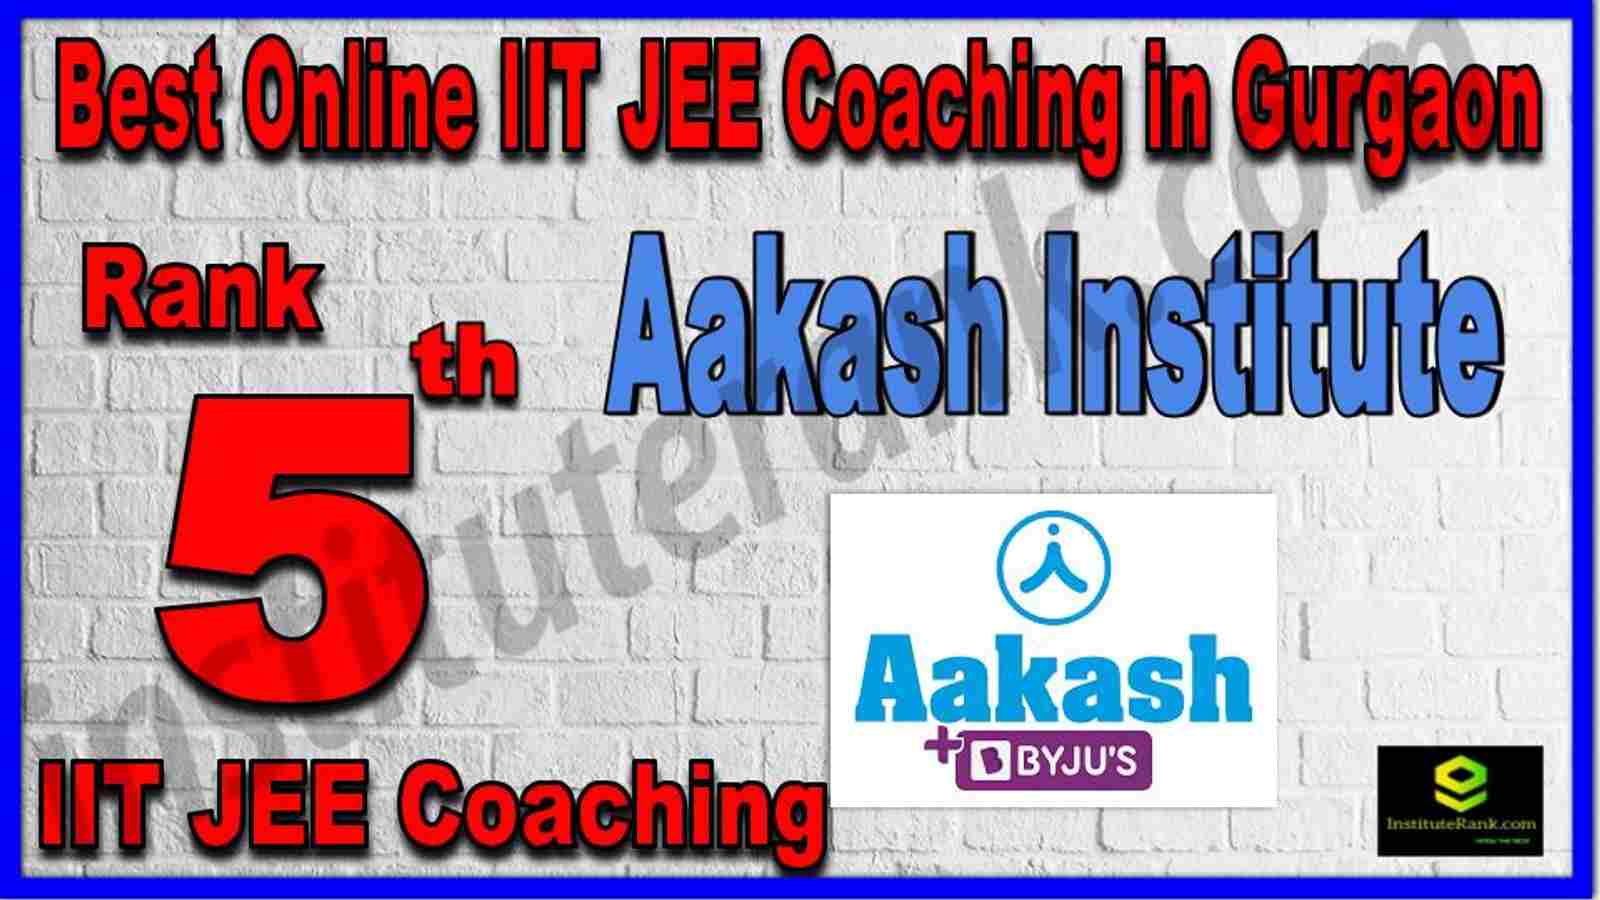 Rank 5th Best Online IIT JEE Coaching in Gurgaon